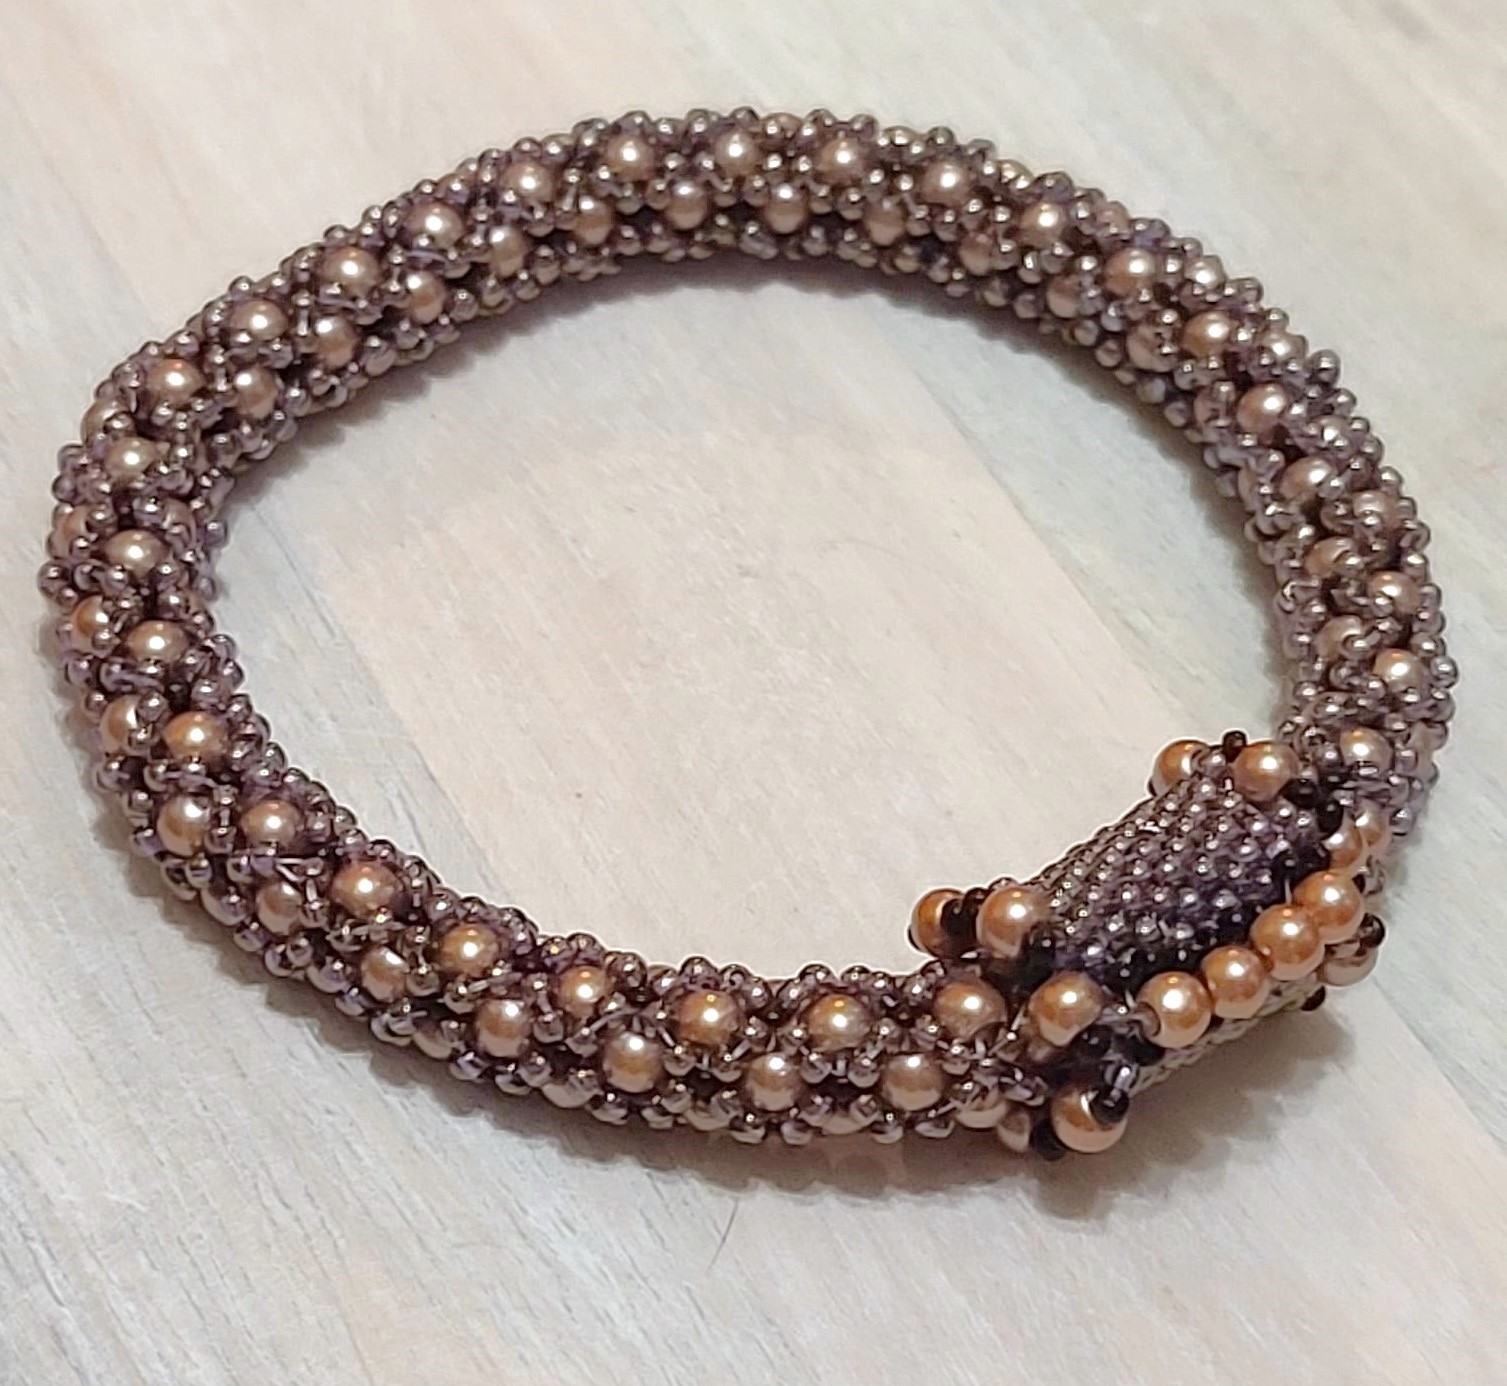 Pearl bangle bracelet, with miyuki glass beads, handcrafted